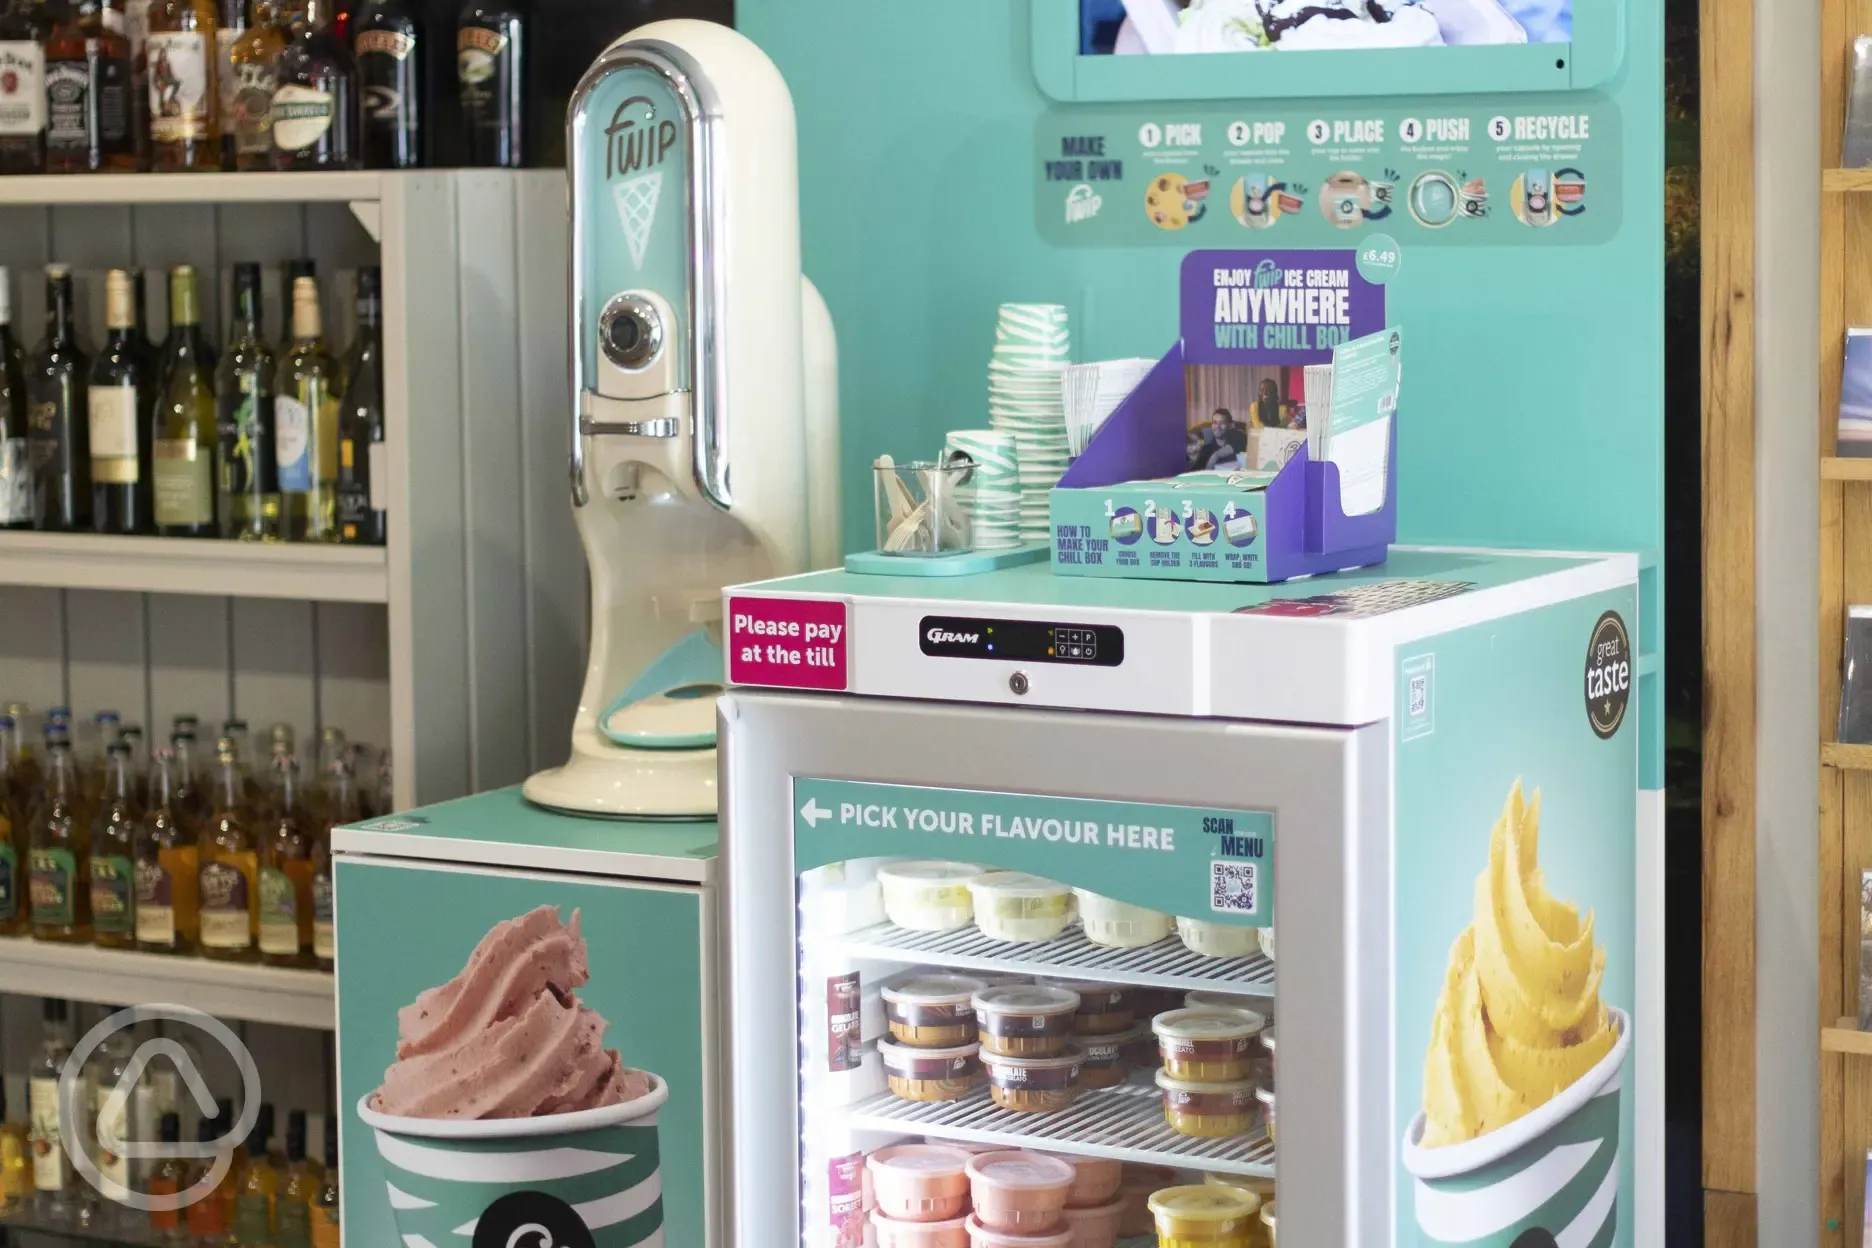 Italian gelato ice cream machine at Old Oaks